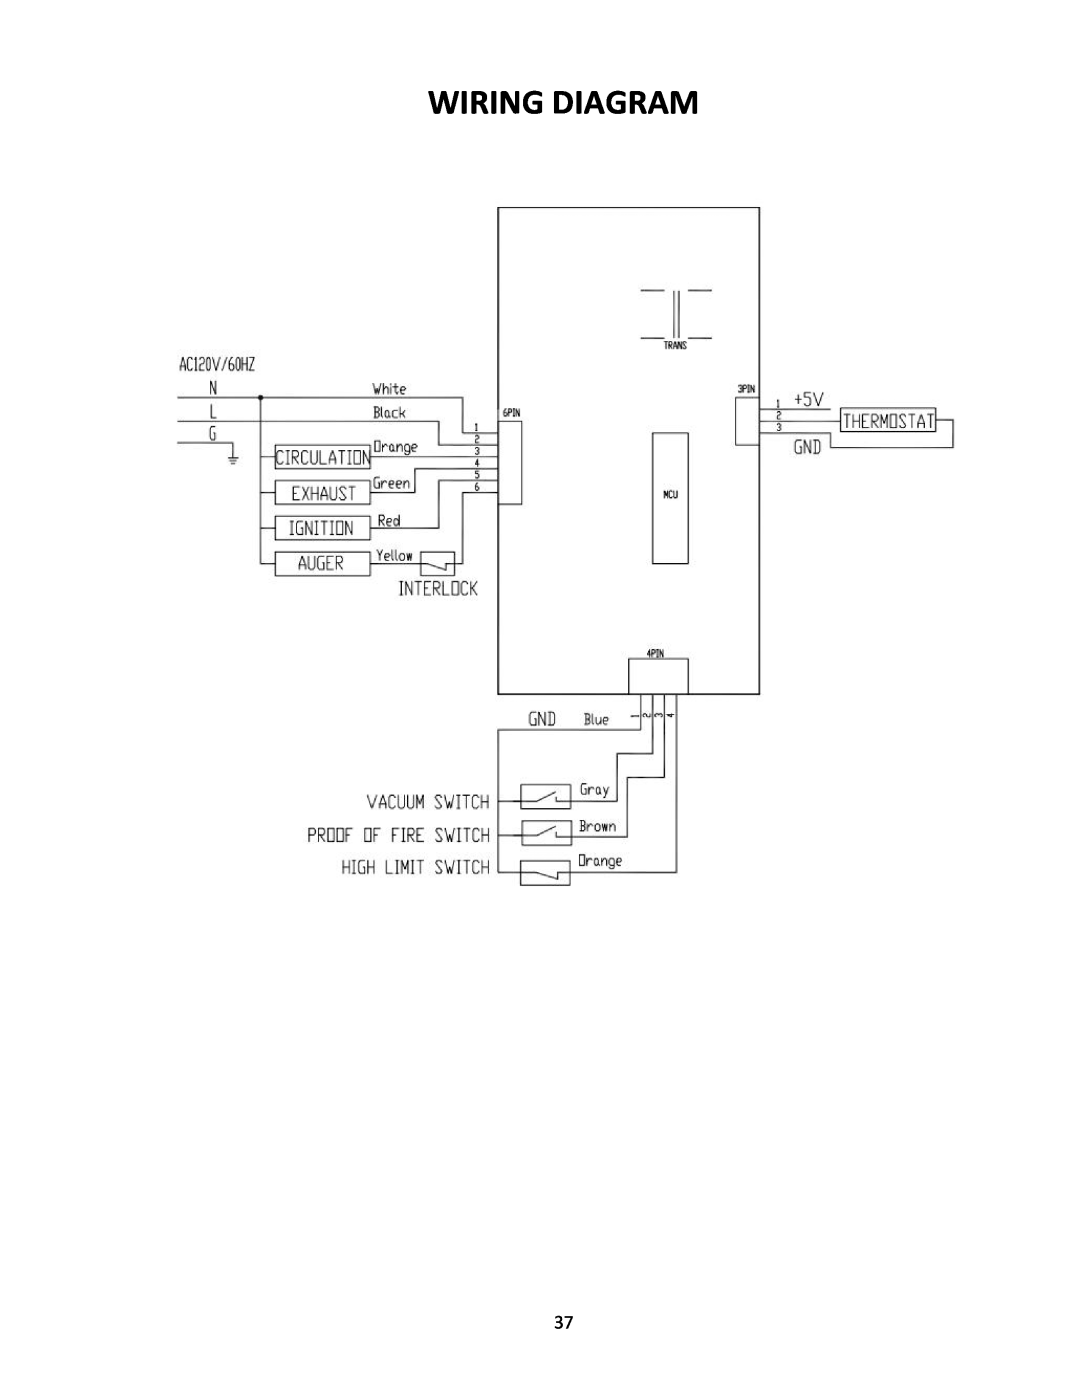 United States Stove 5660(I) manual Wiring Diagram 